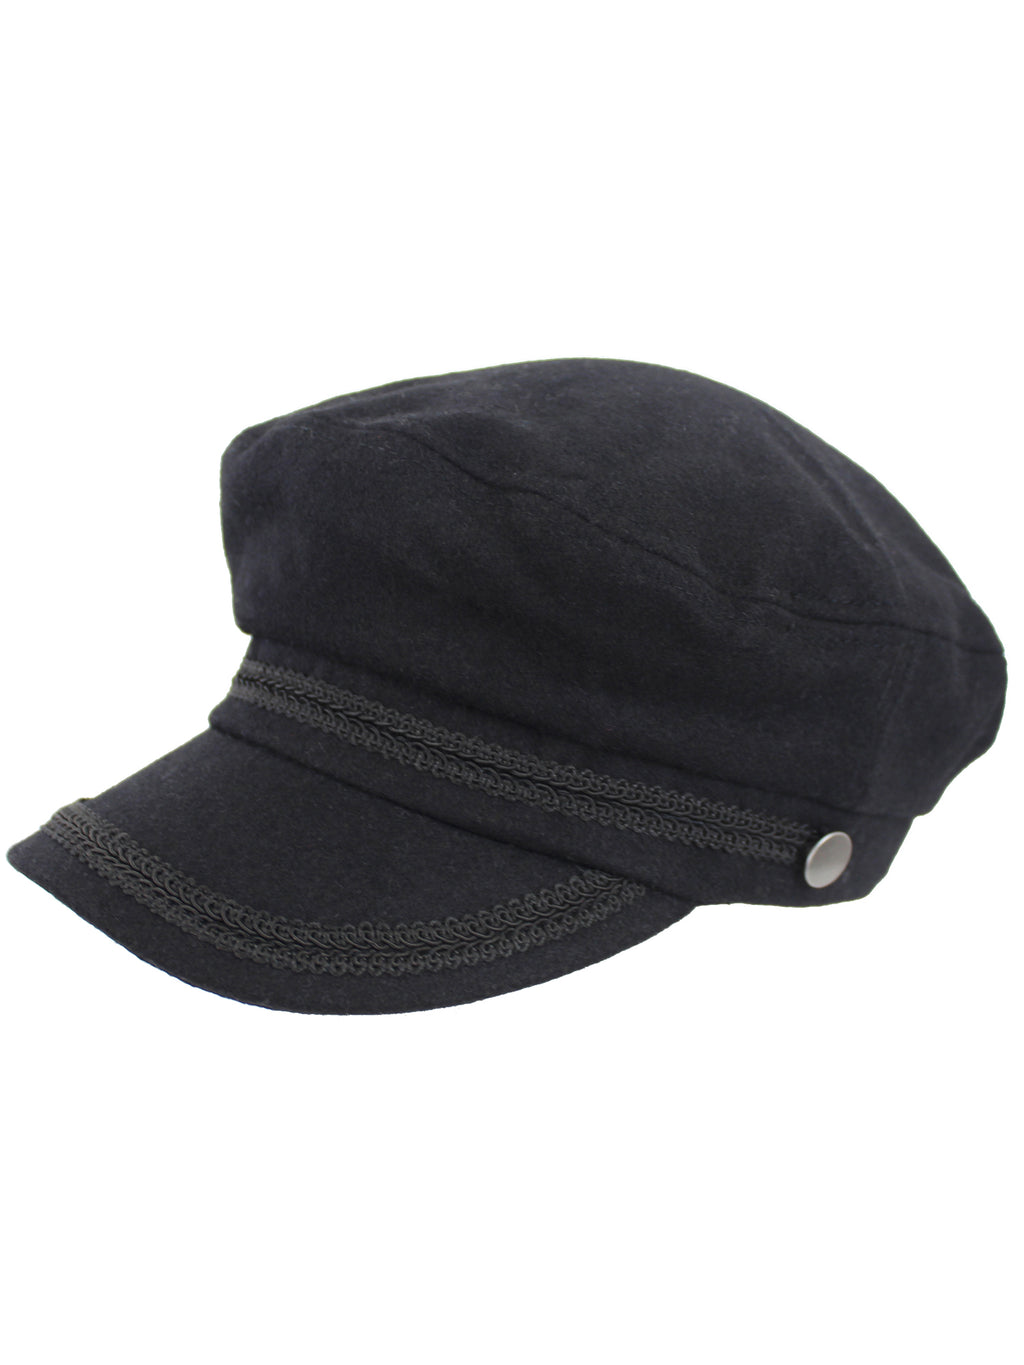 Black Wool Fisherman Cabbie Hat